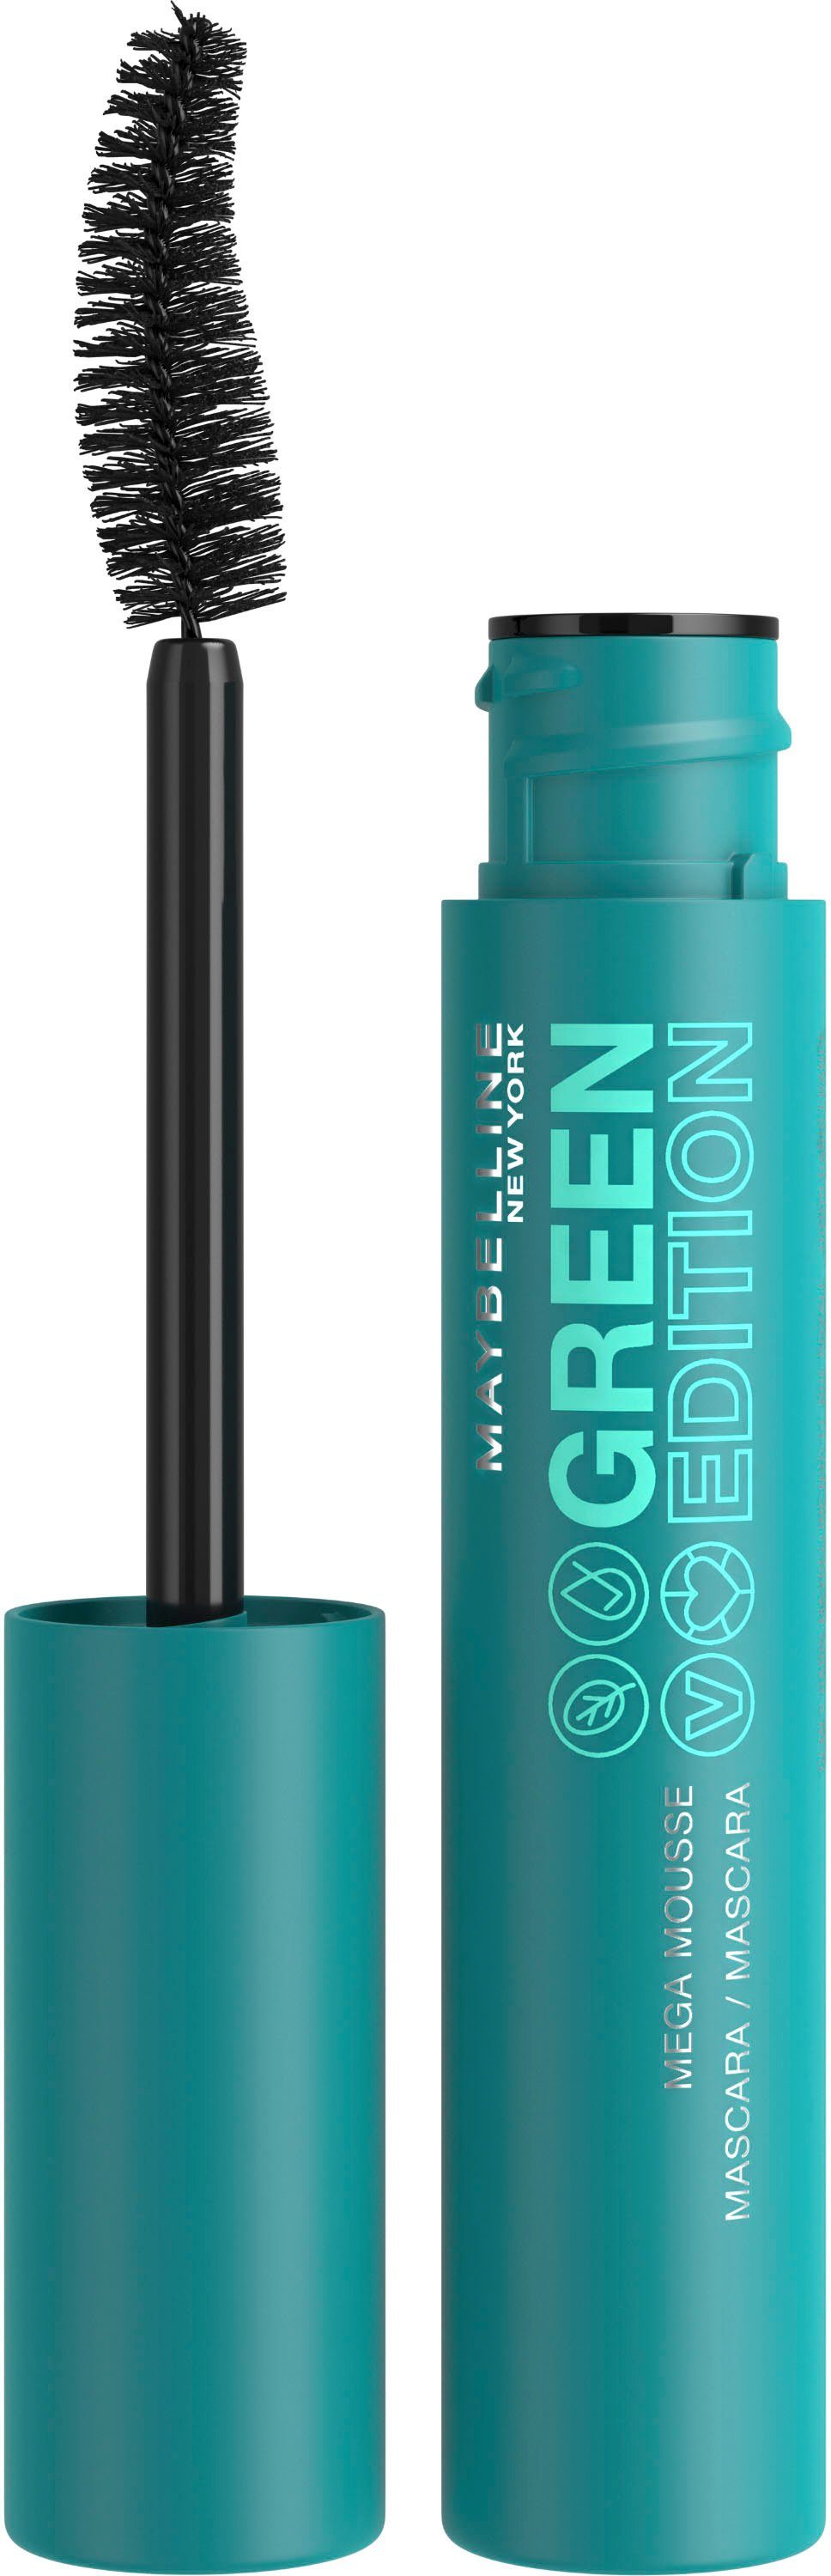 Verkaufserfolg Nr. 1 MAYBELLINE NEW braun Edition WSH Mega Green Mascara Mousse Mascara YORK 003